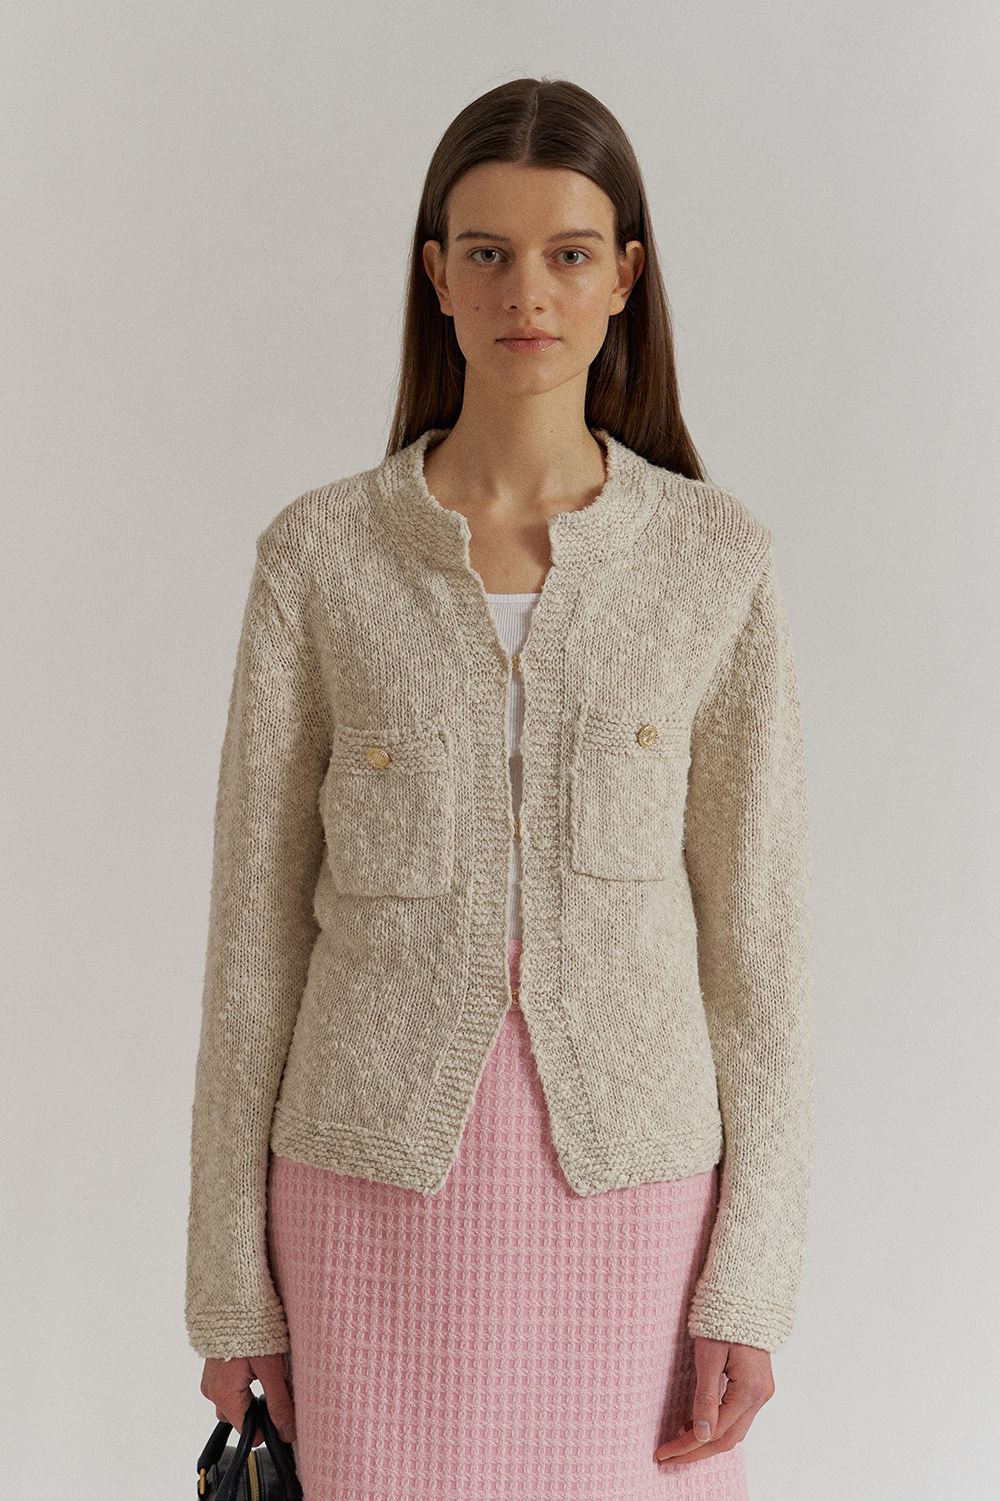 Mignon Knit Jacket in Aura White